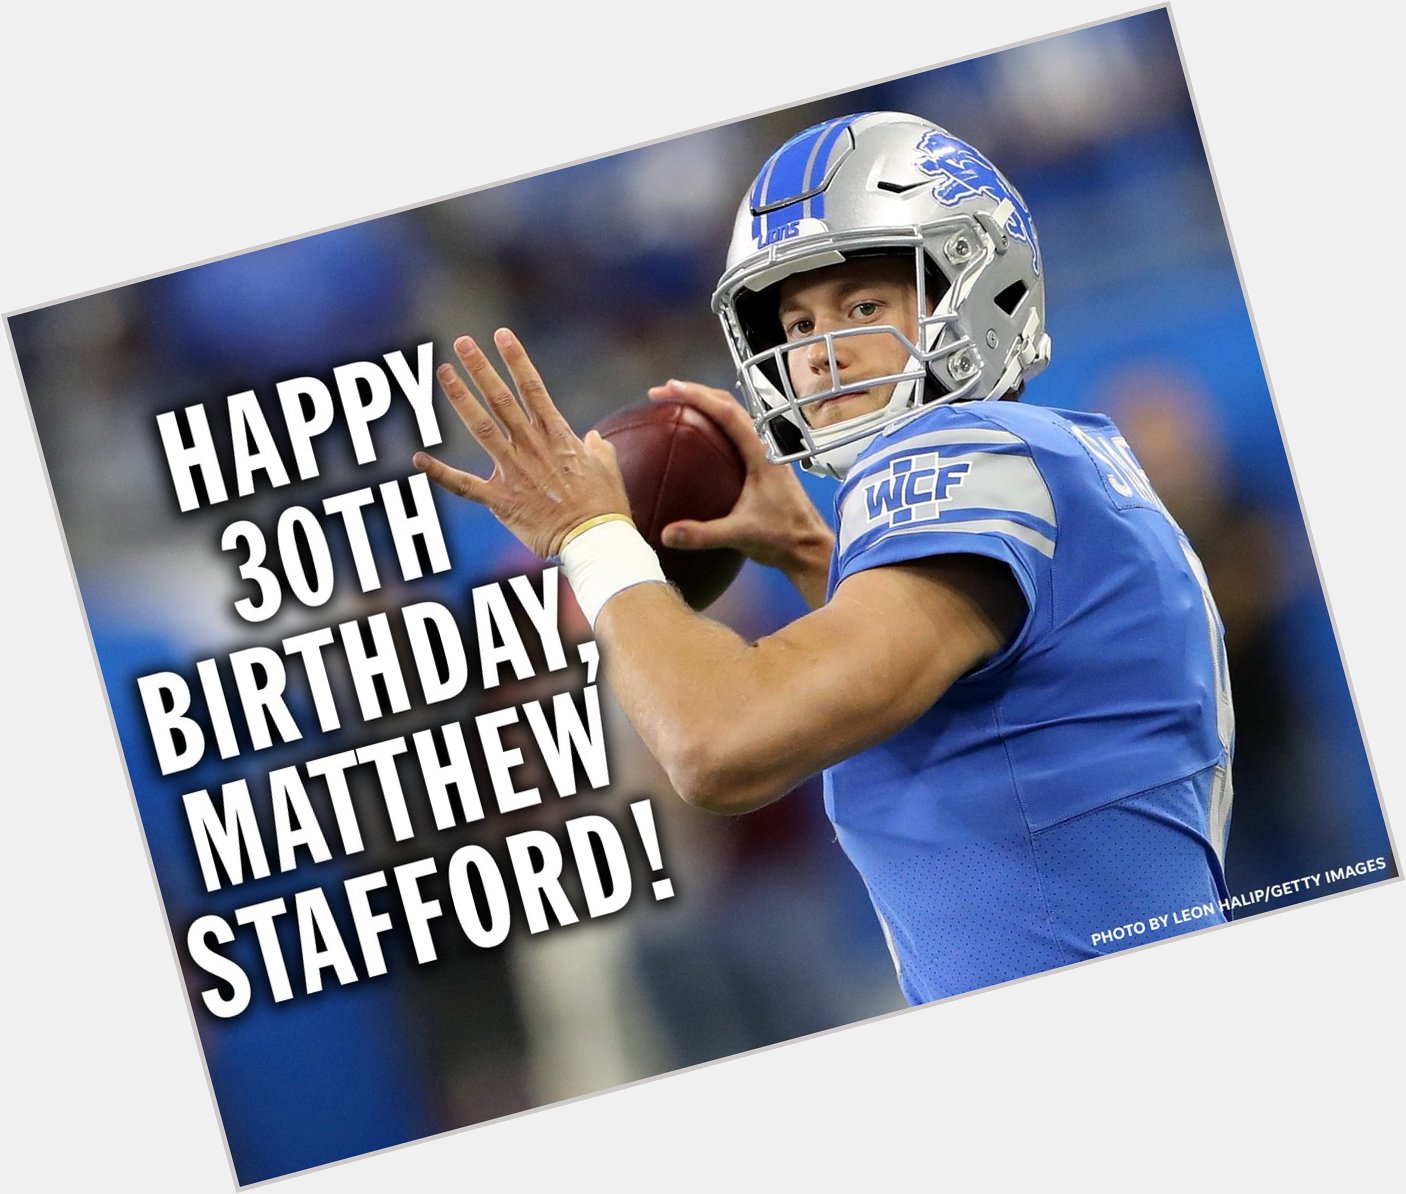 Happy 30th birthday to quarterback Matthew Stafford!  